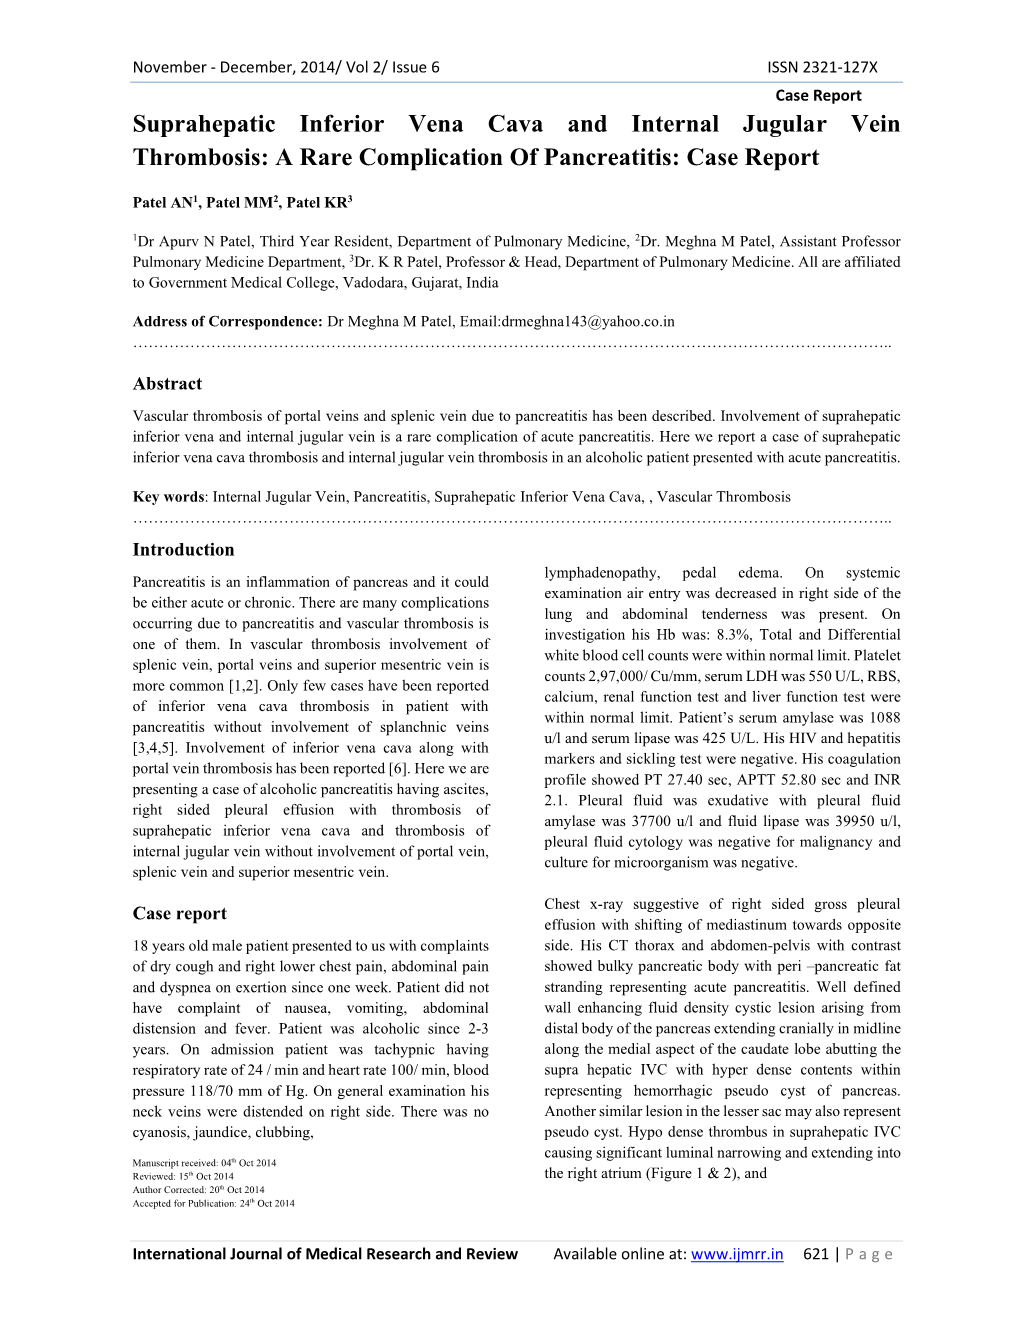 Suprahepatic Inferior Vena Cava and Internal Jugular Vein Thrombosis: a Rare Complication of Pancreatitis: Case Report